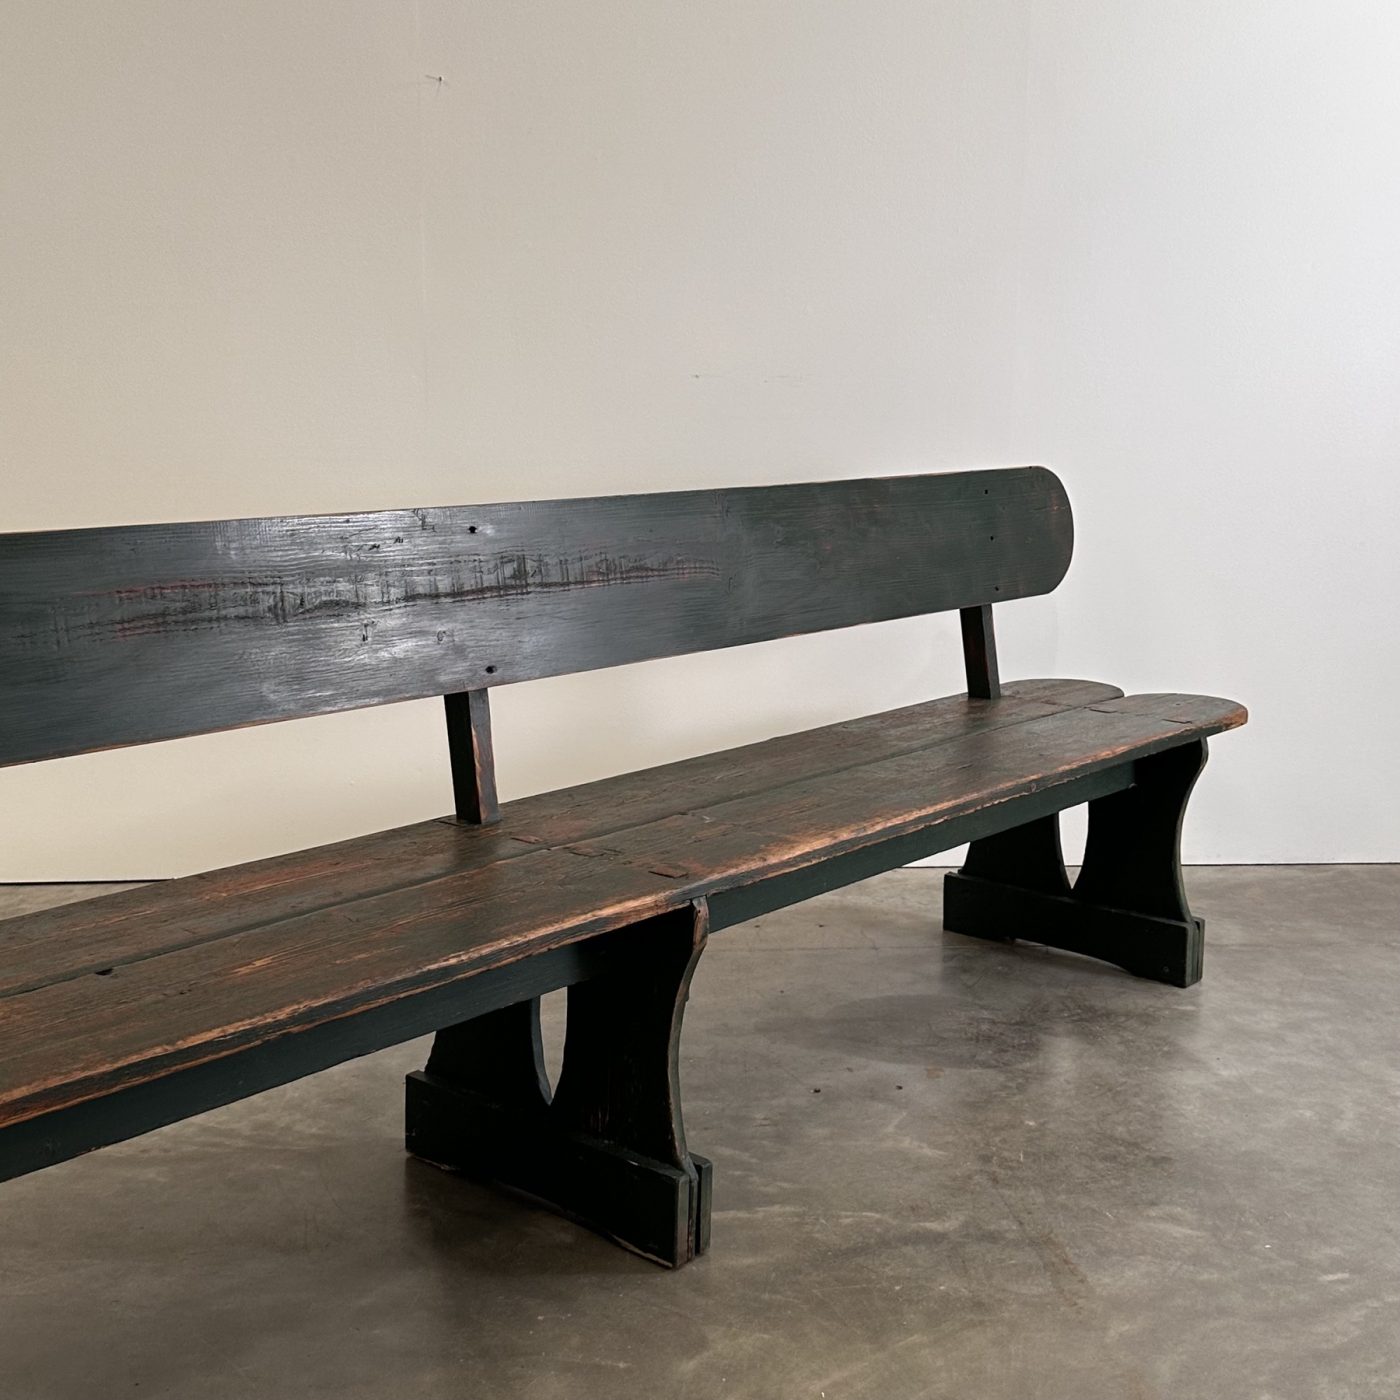 objet-vagabond-painted-bench0001